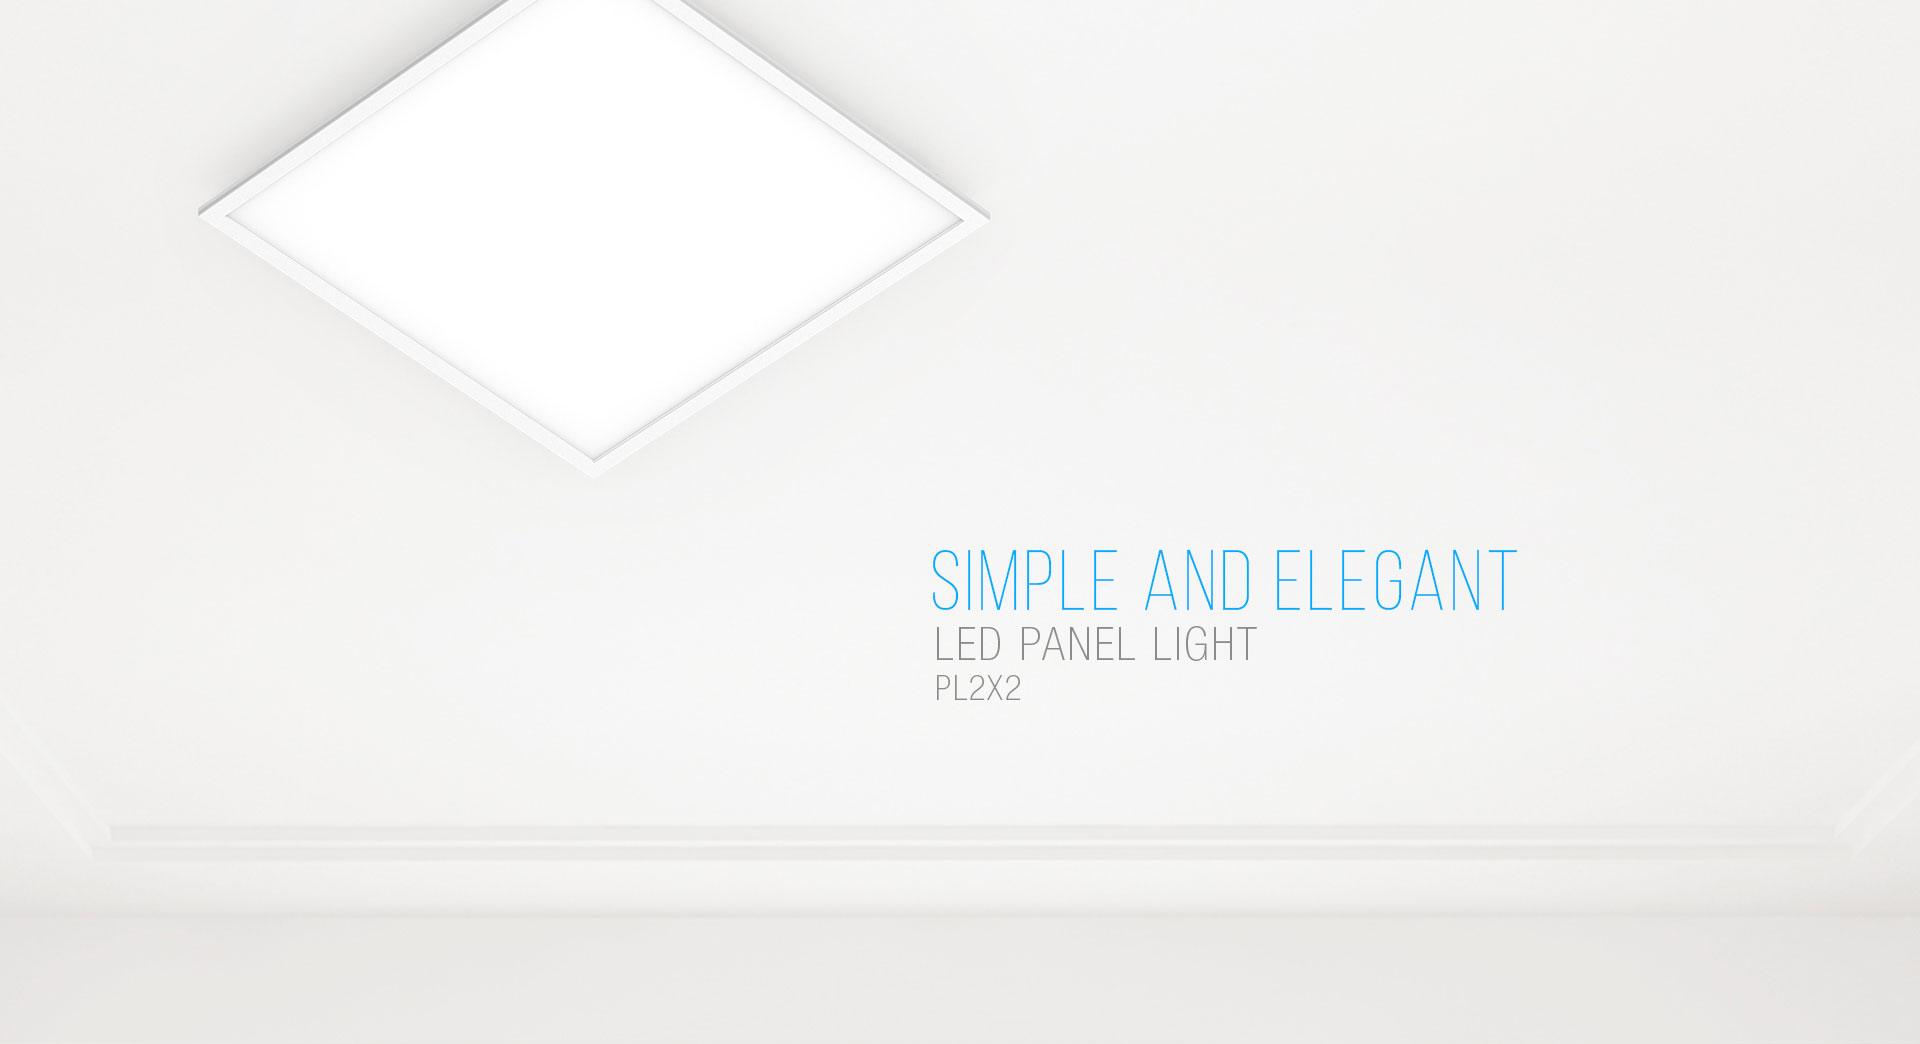 PL2x2 LED Ceiling Panel Light_01